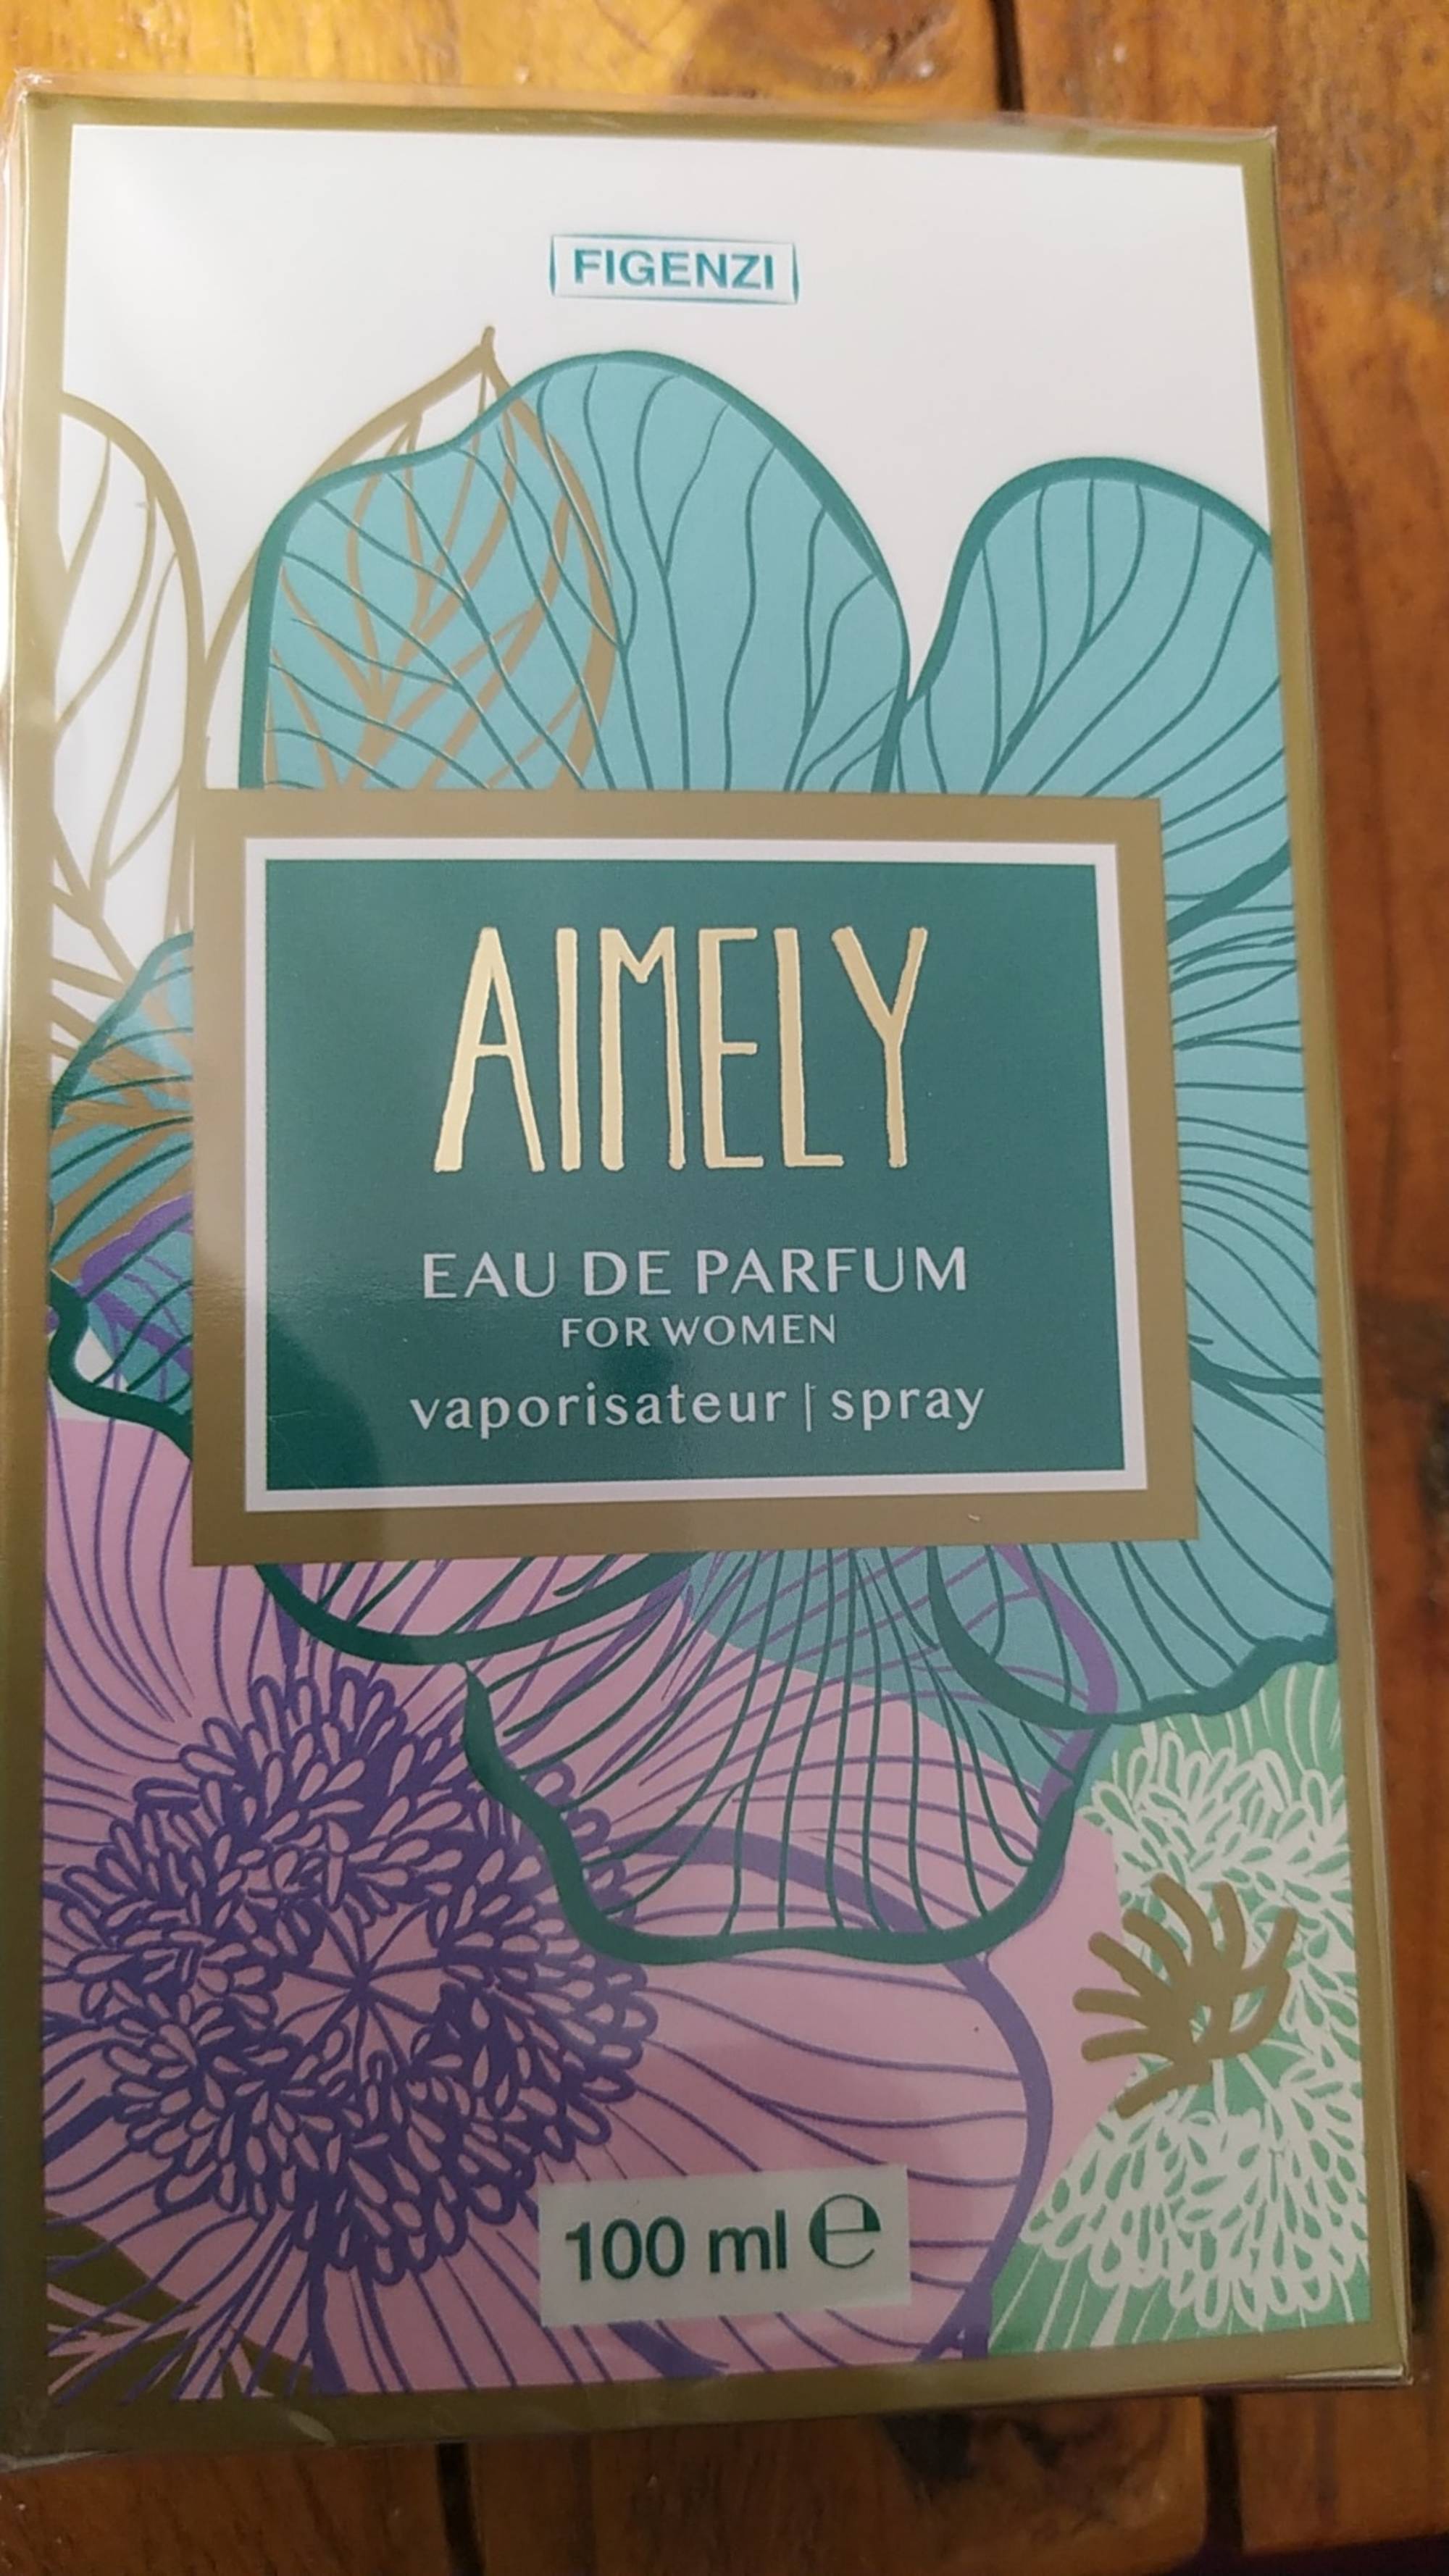 FIGENZI - Aimely - Eau de parfum for women